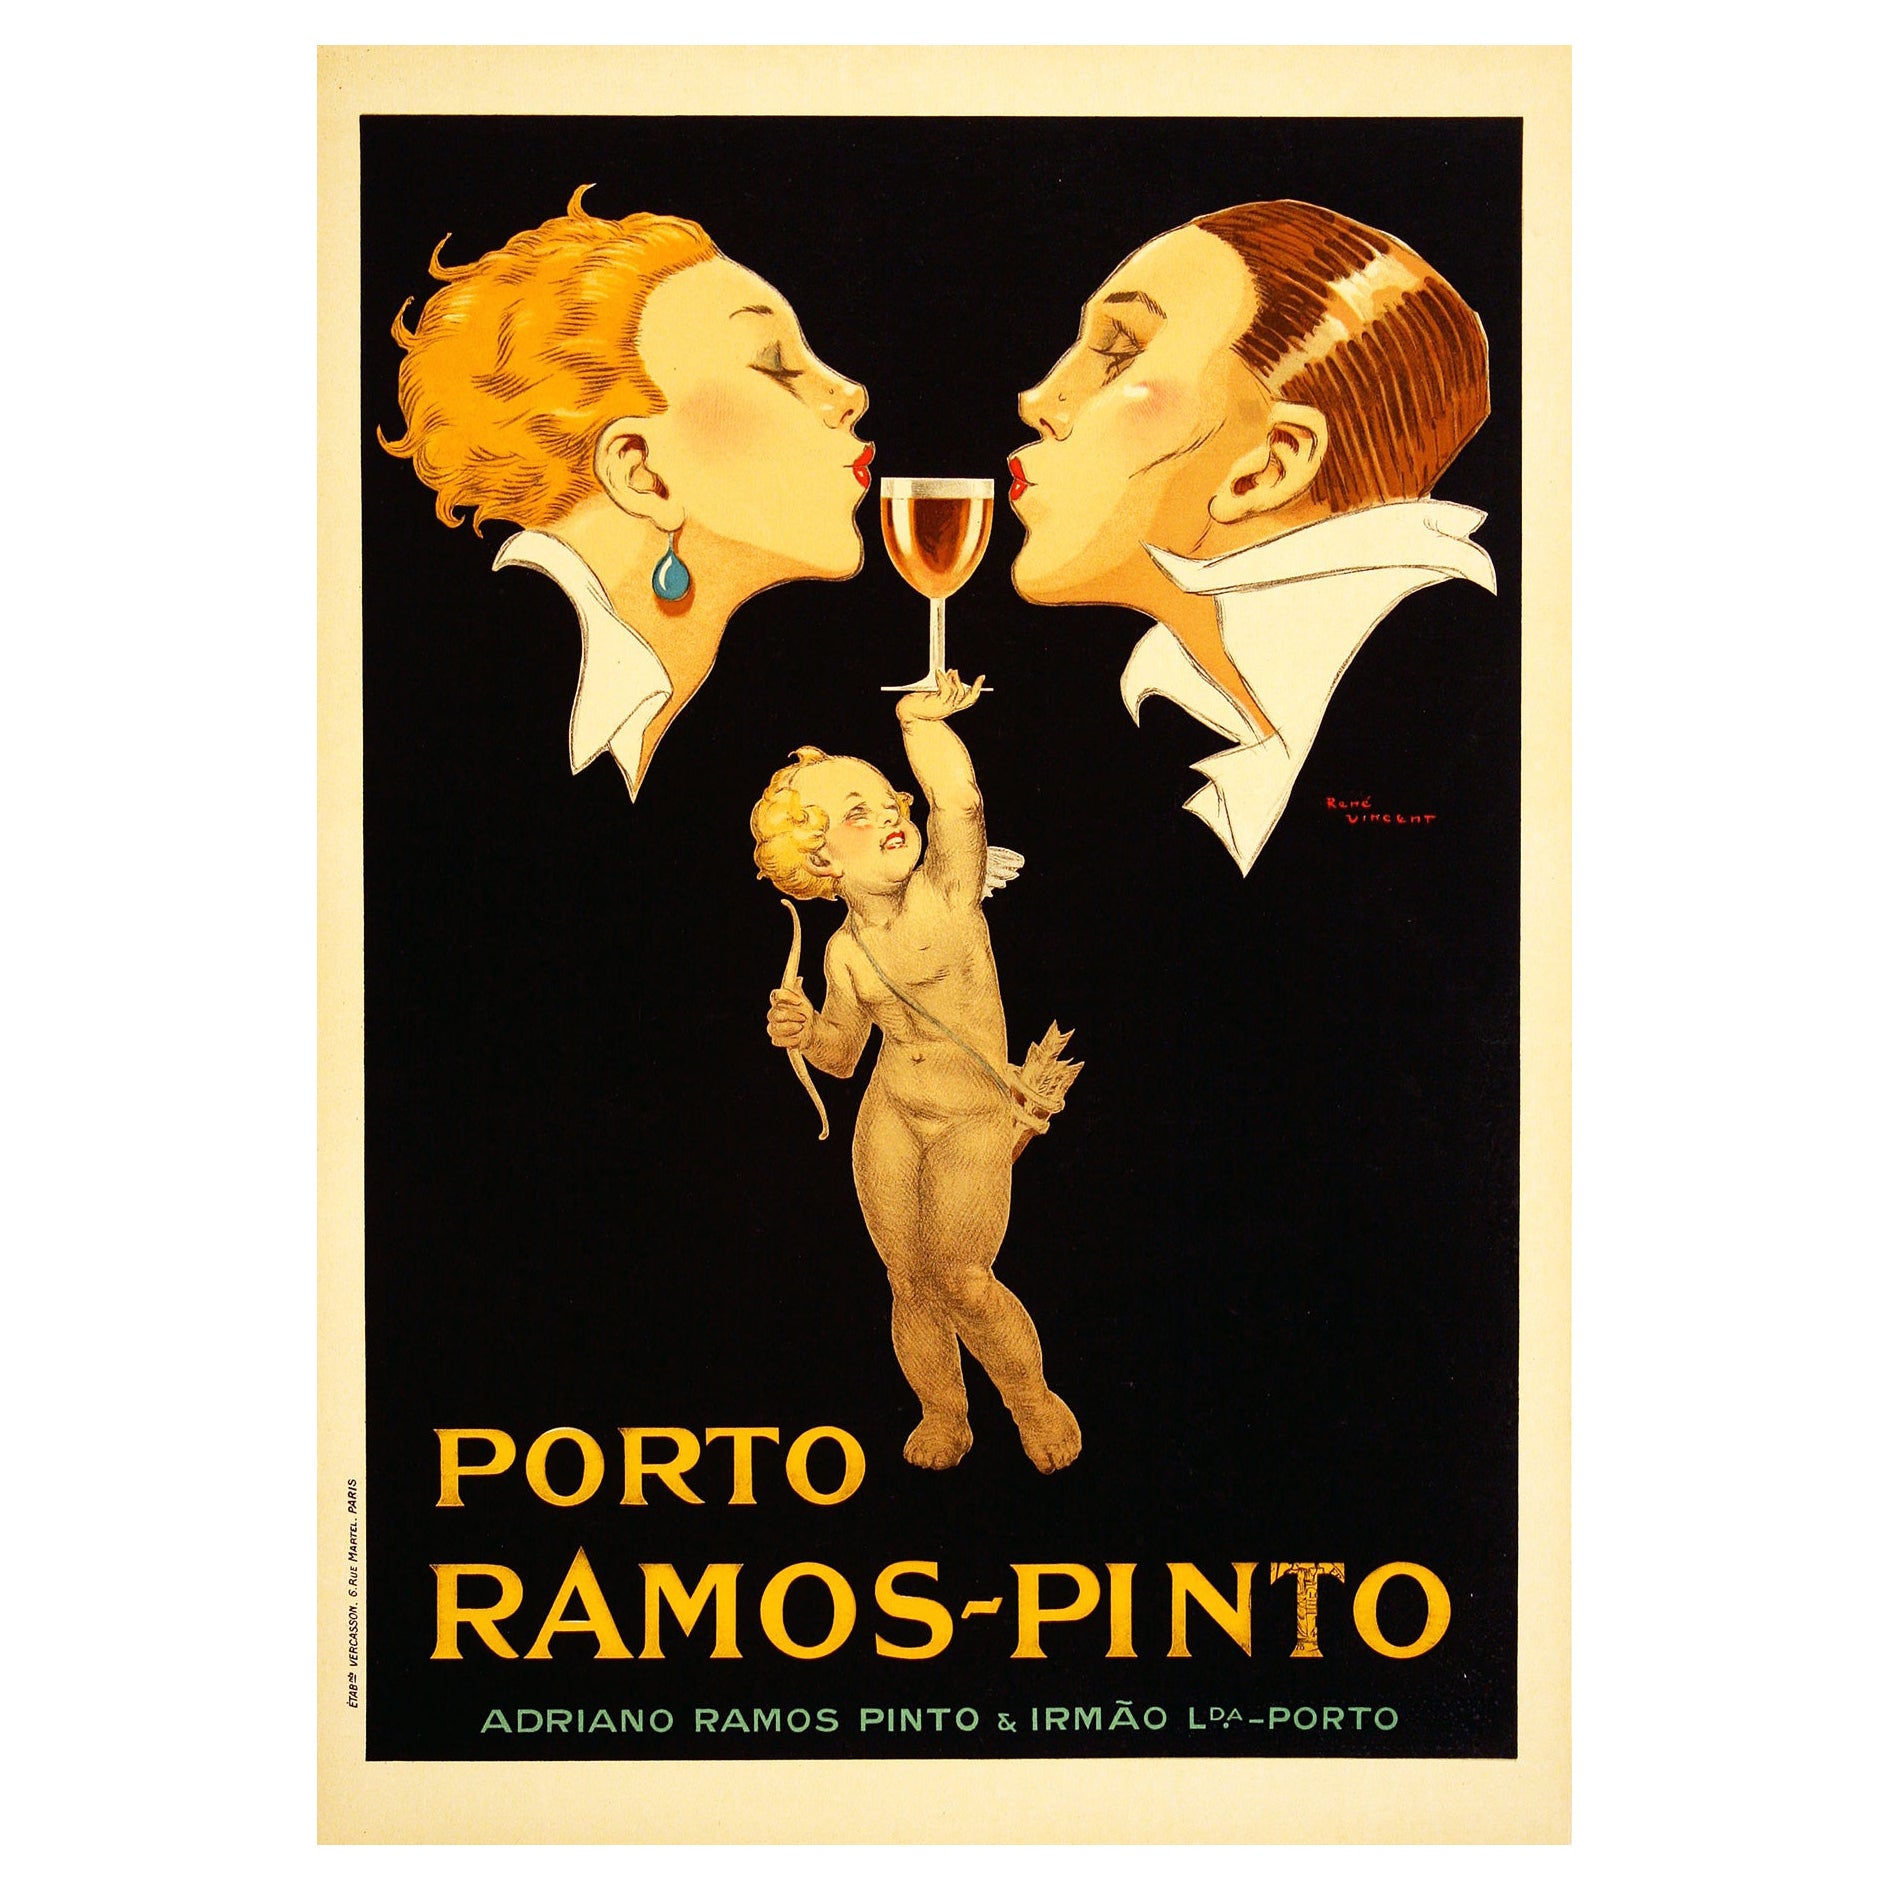 Porto Ramos, 1920 Vintage French Alcohol Advertising Poster